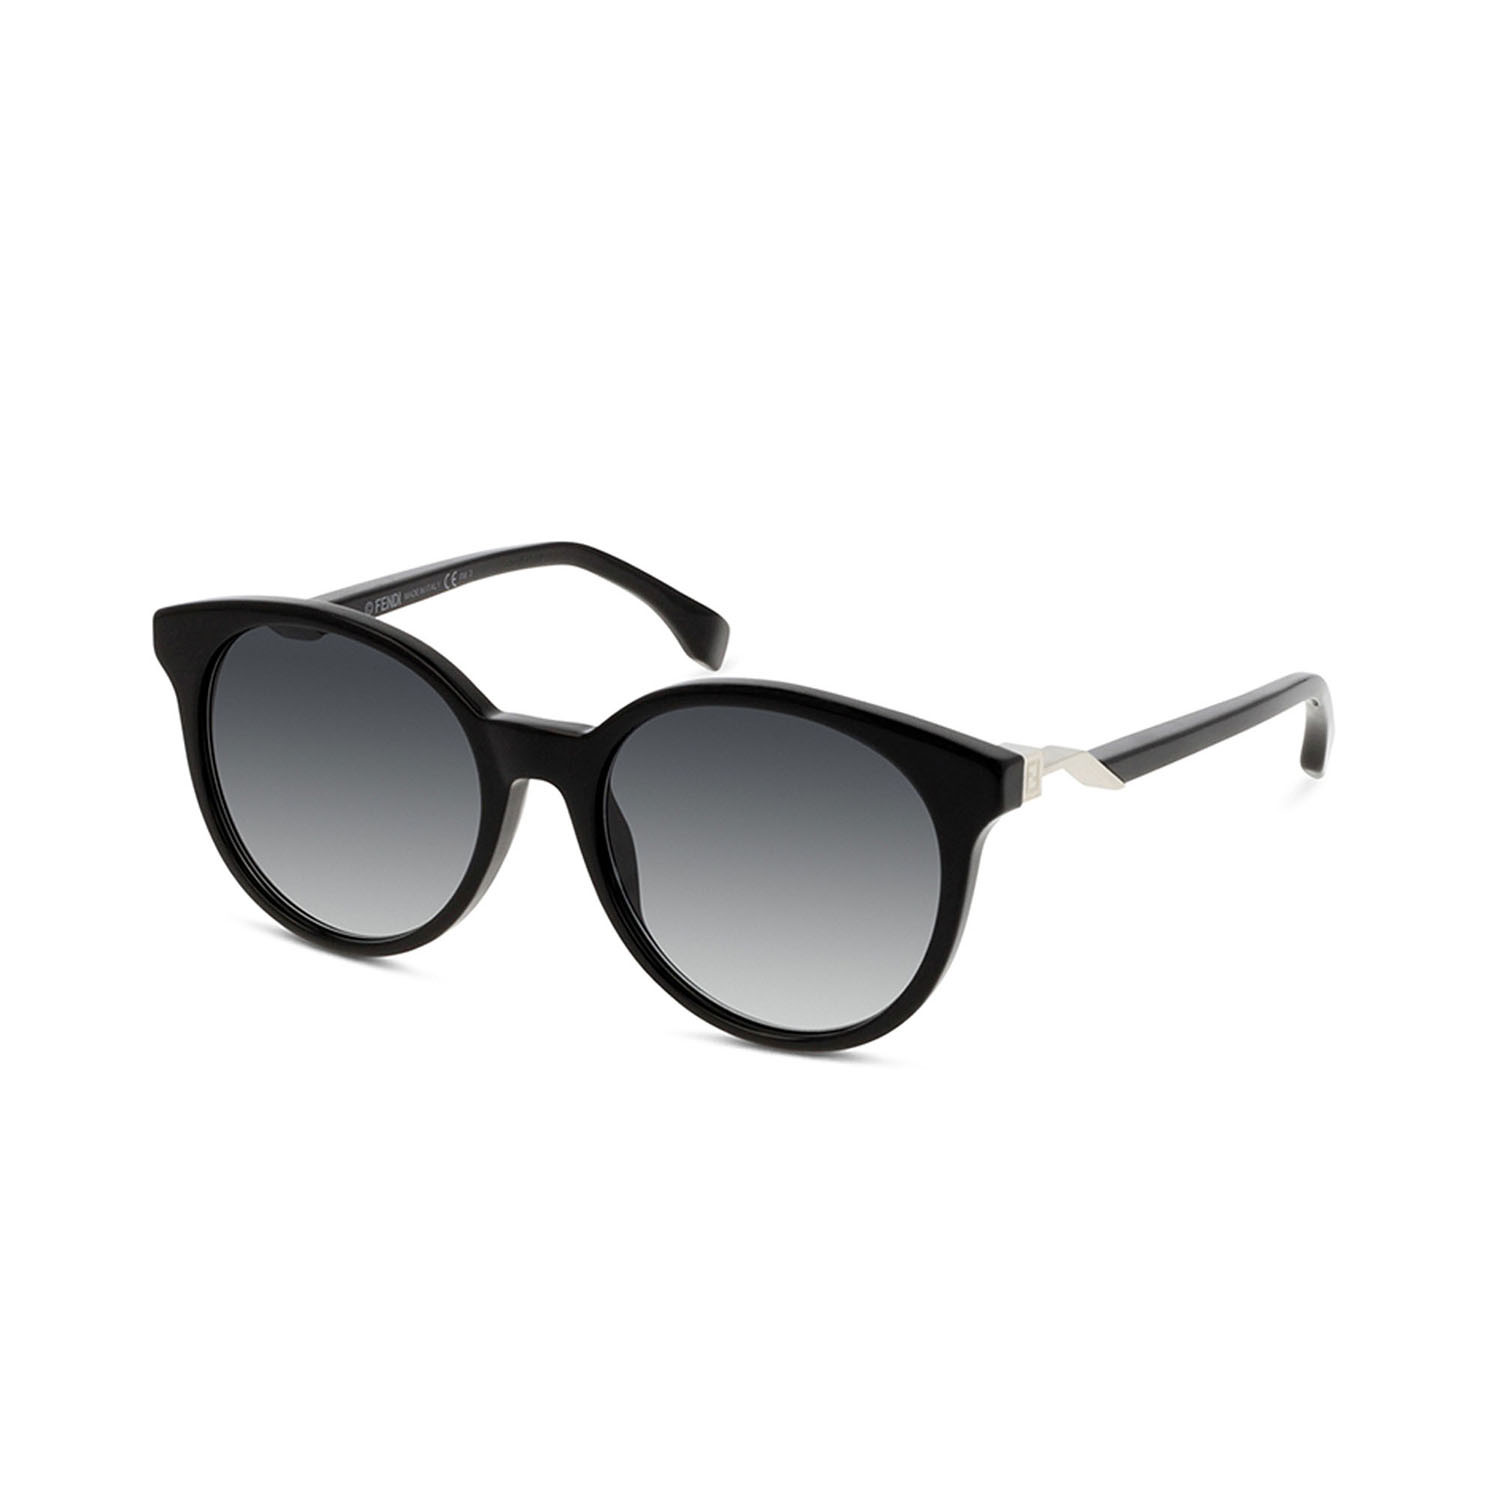 Fendi // Women's Sunglasses V3 // Black + Gray Gradient - Women's ...